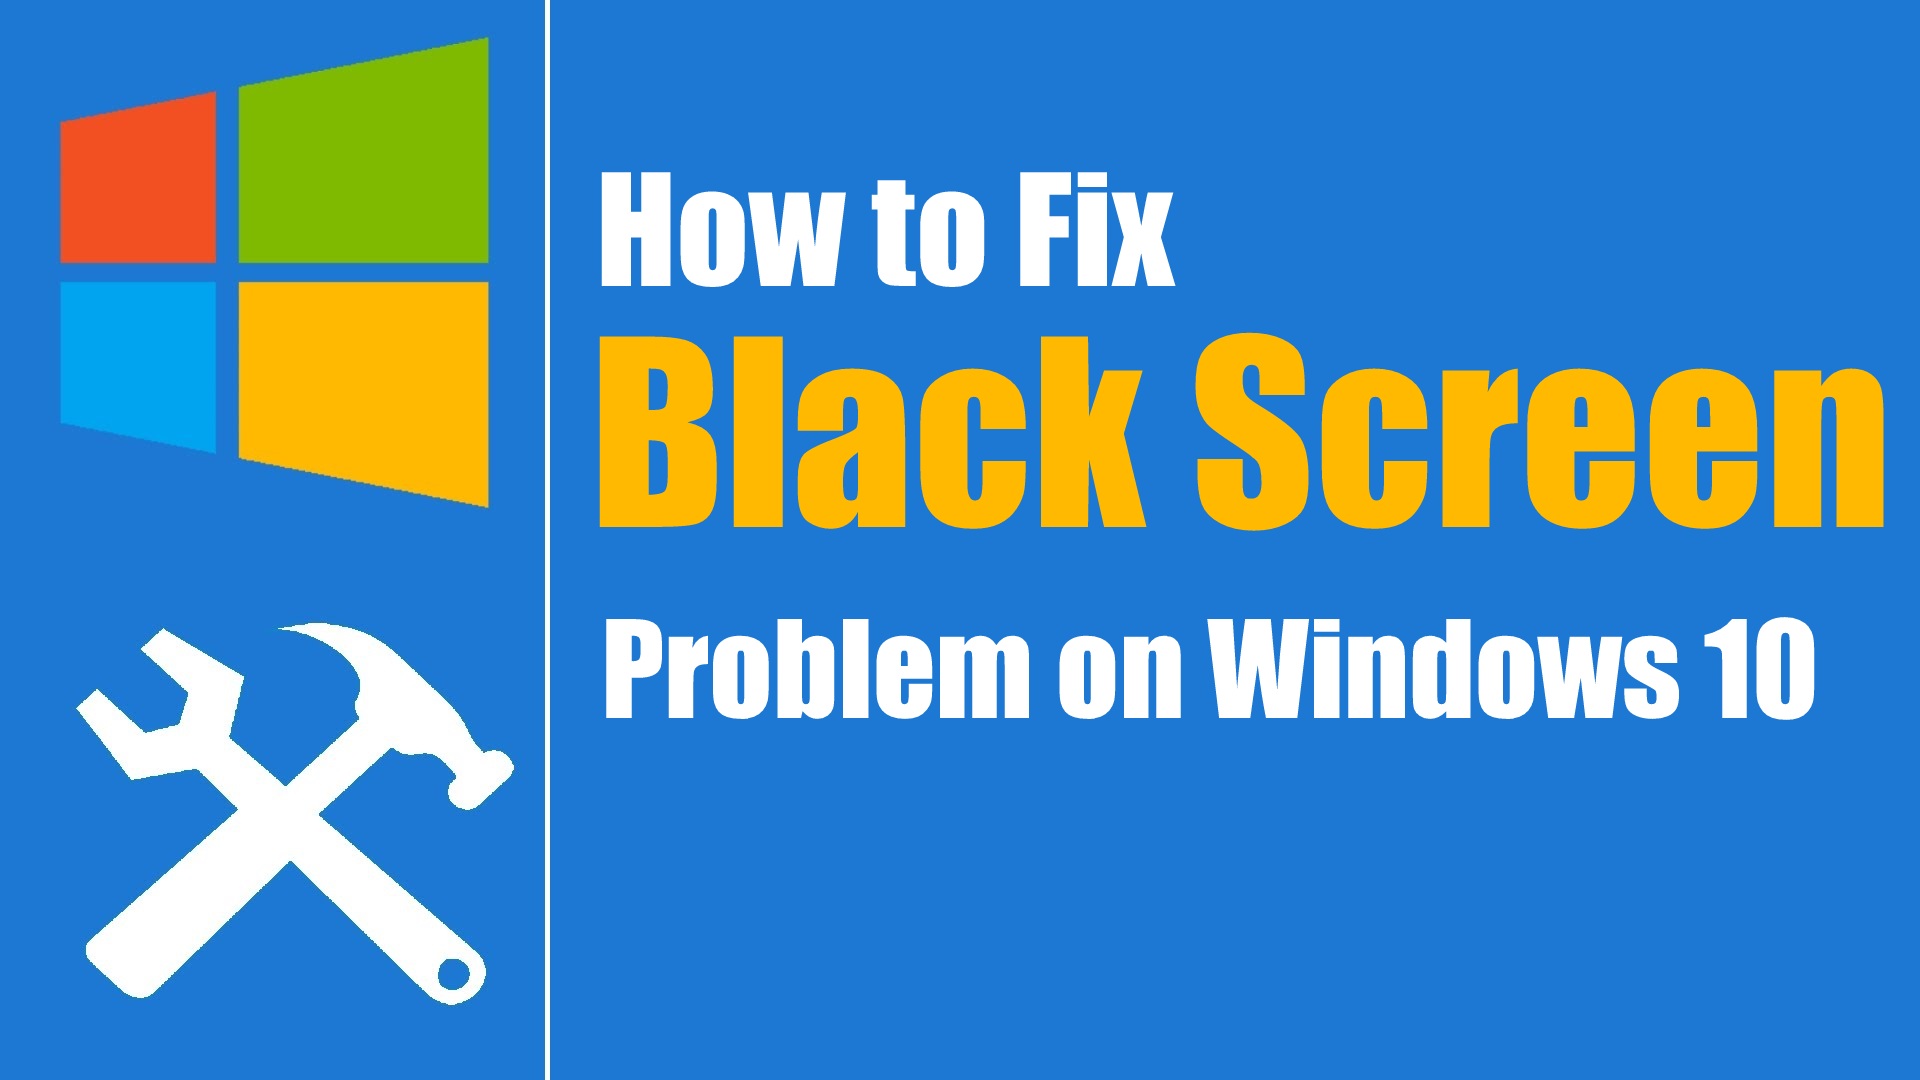 black screen on startup windows 10 | Windows 10 | Windows 10 Startup Issue